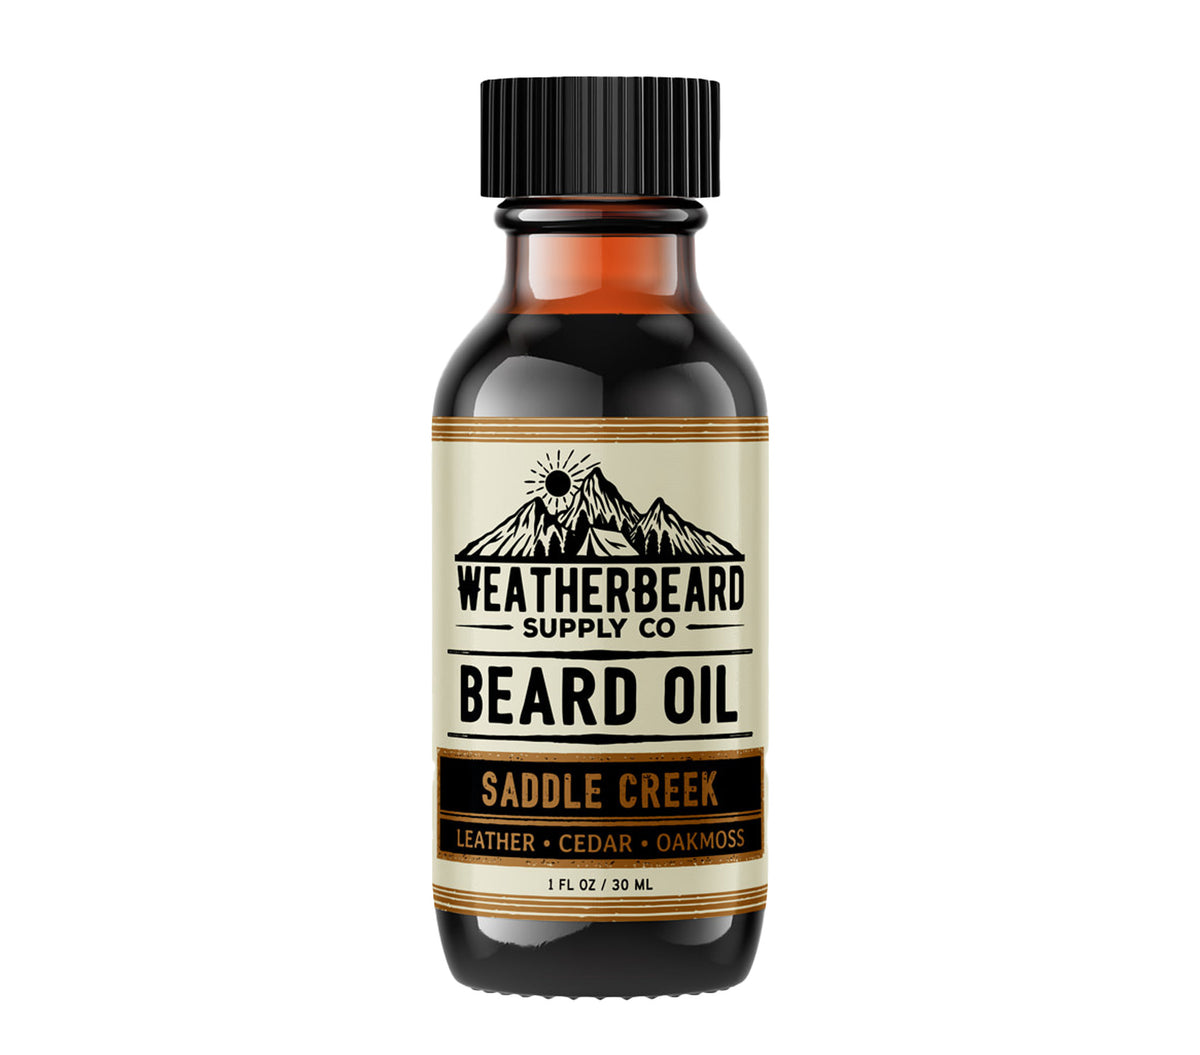 Signature Beard Oil